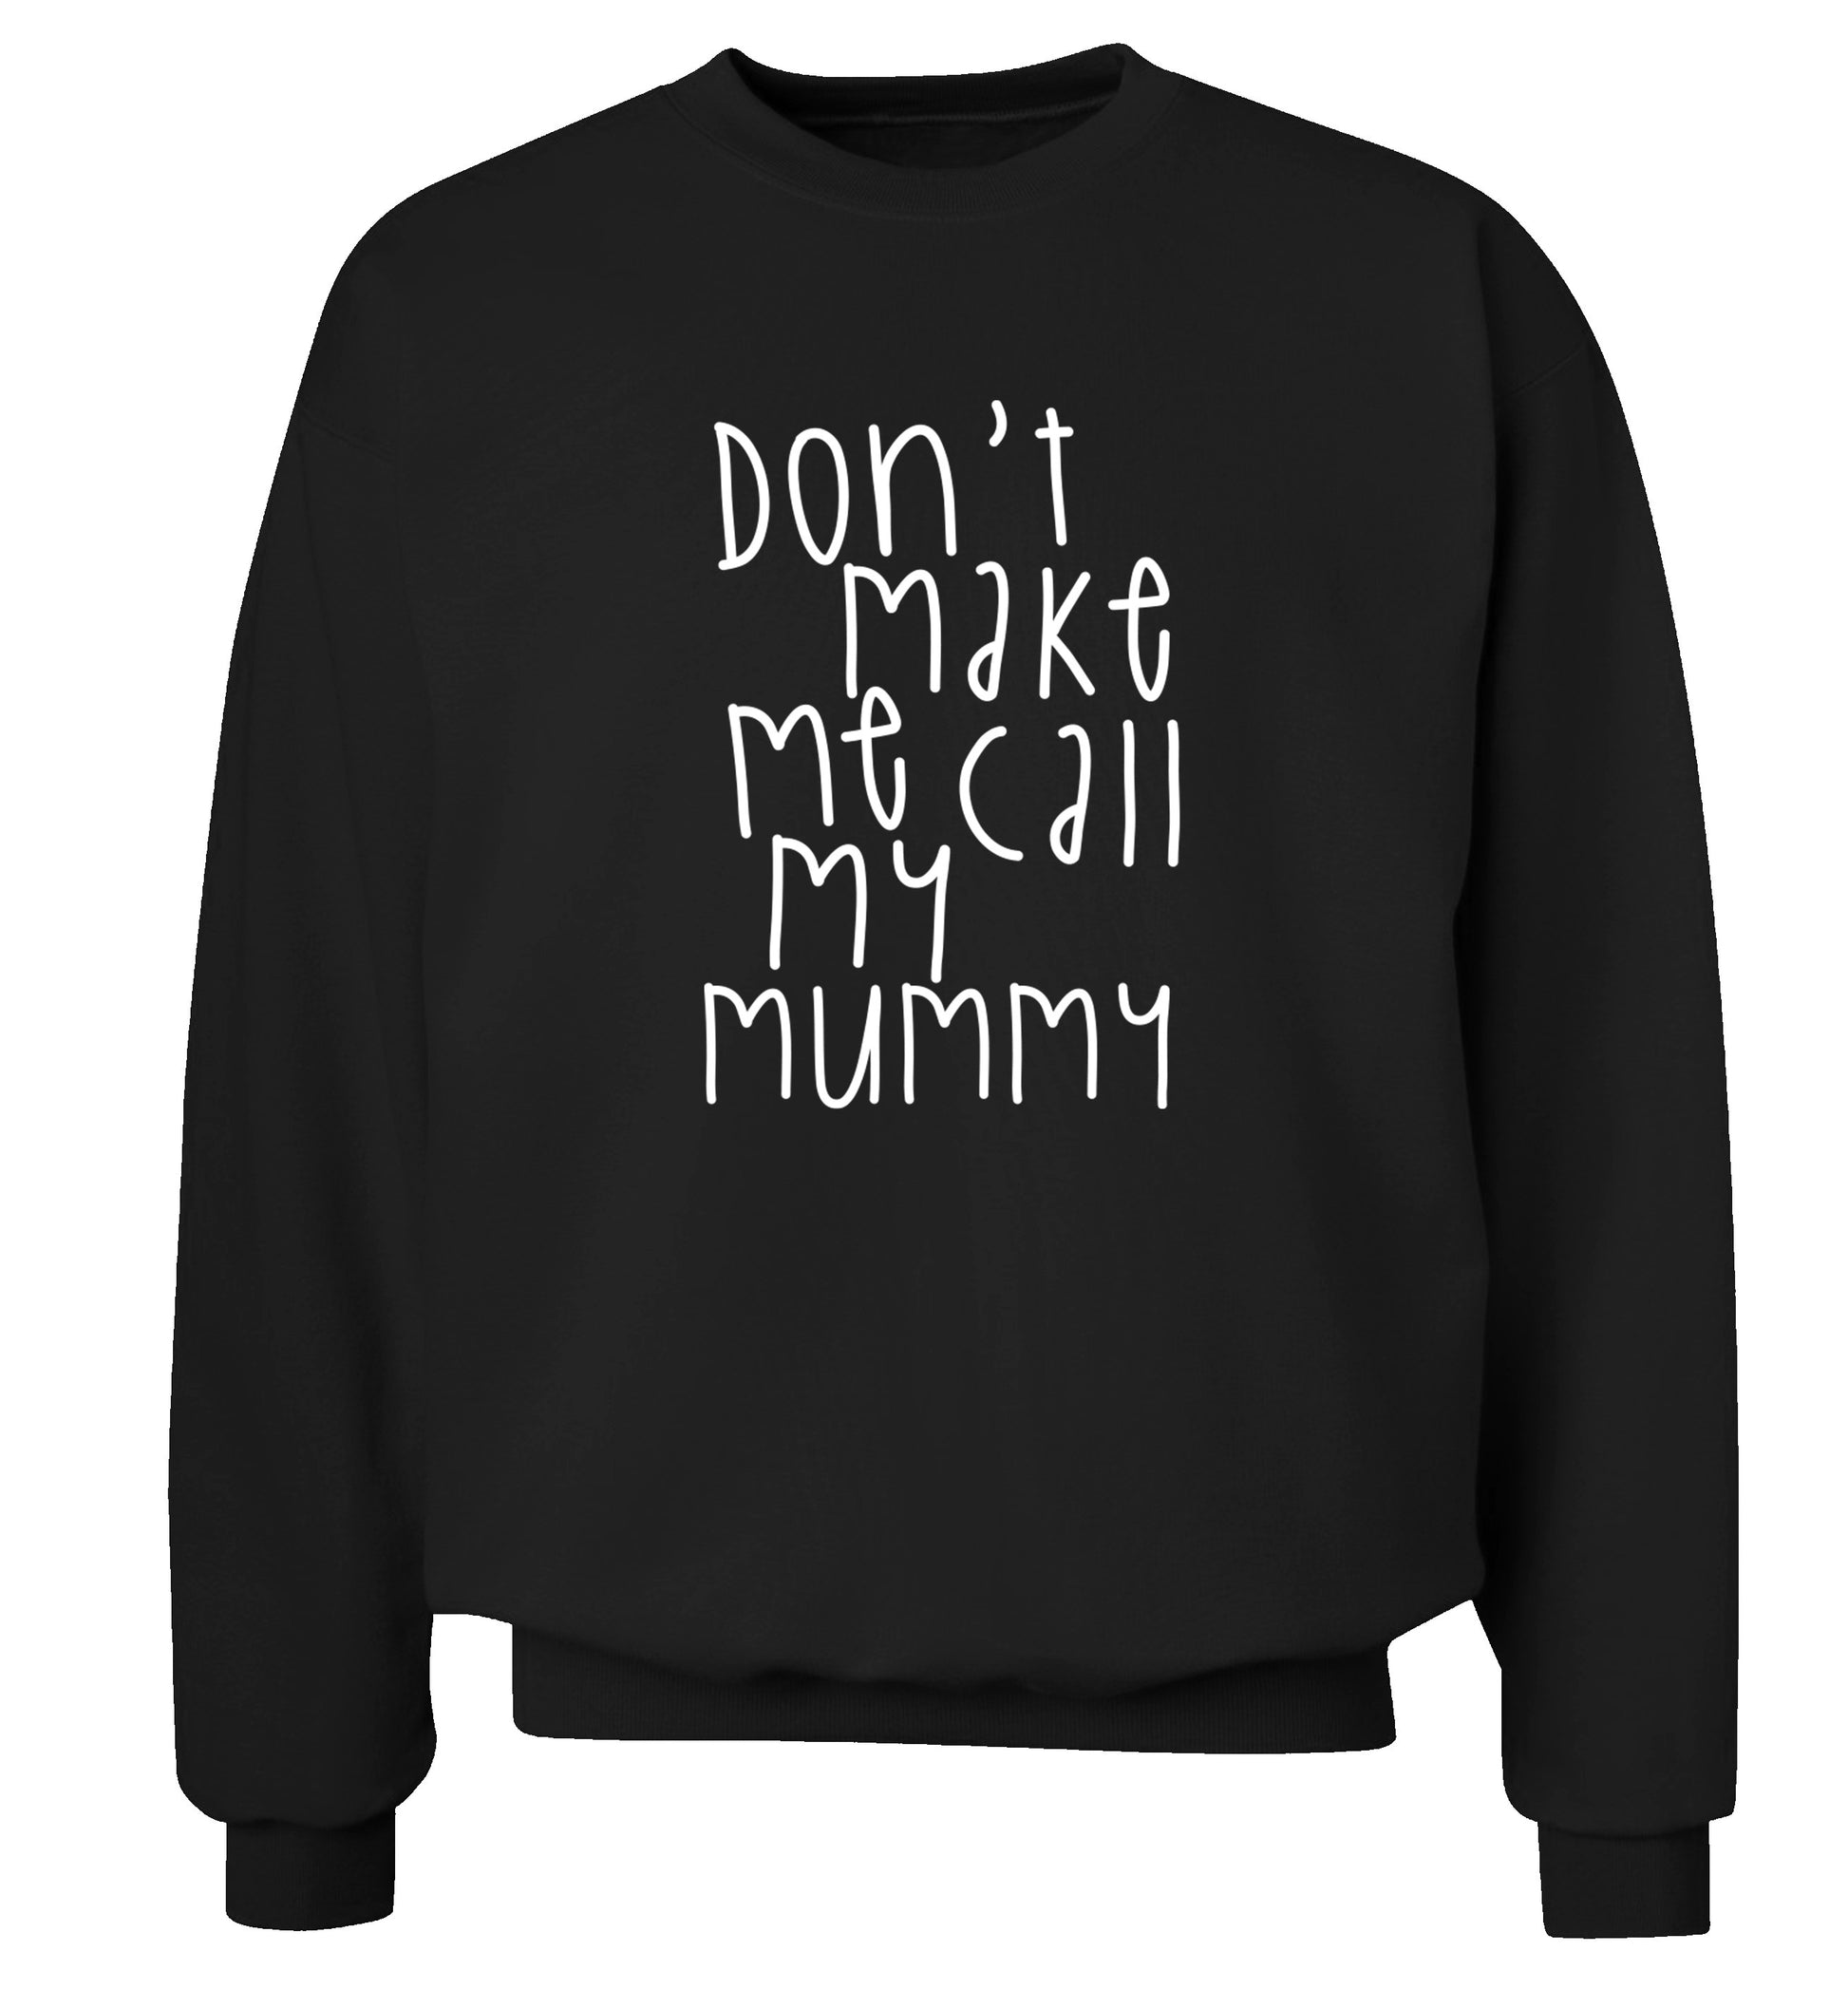 Don't make me call my mummy Adult's unisex black Sweater 2XL